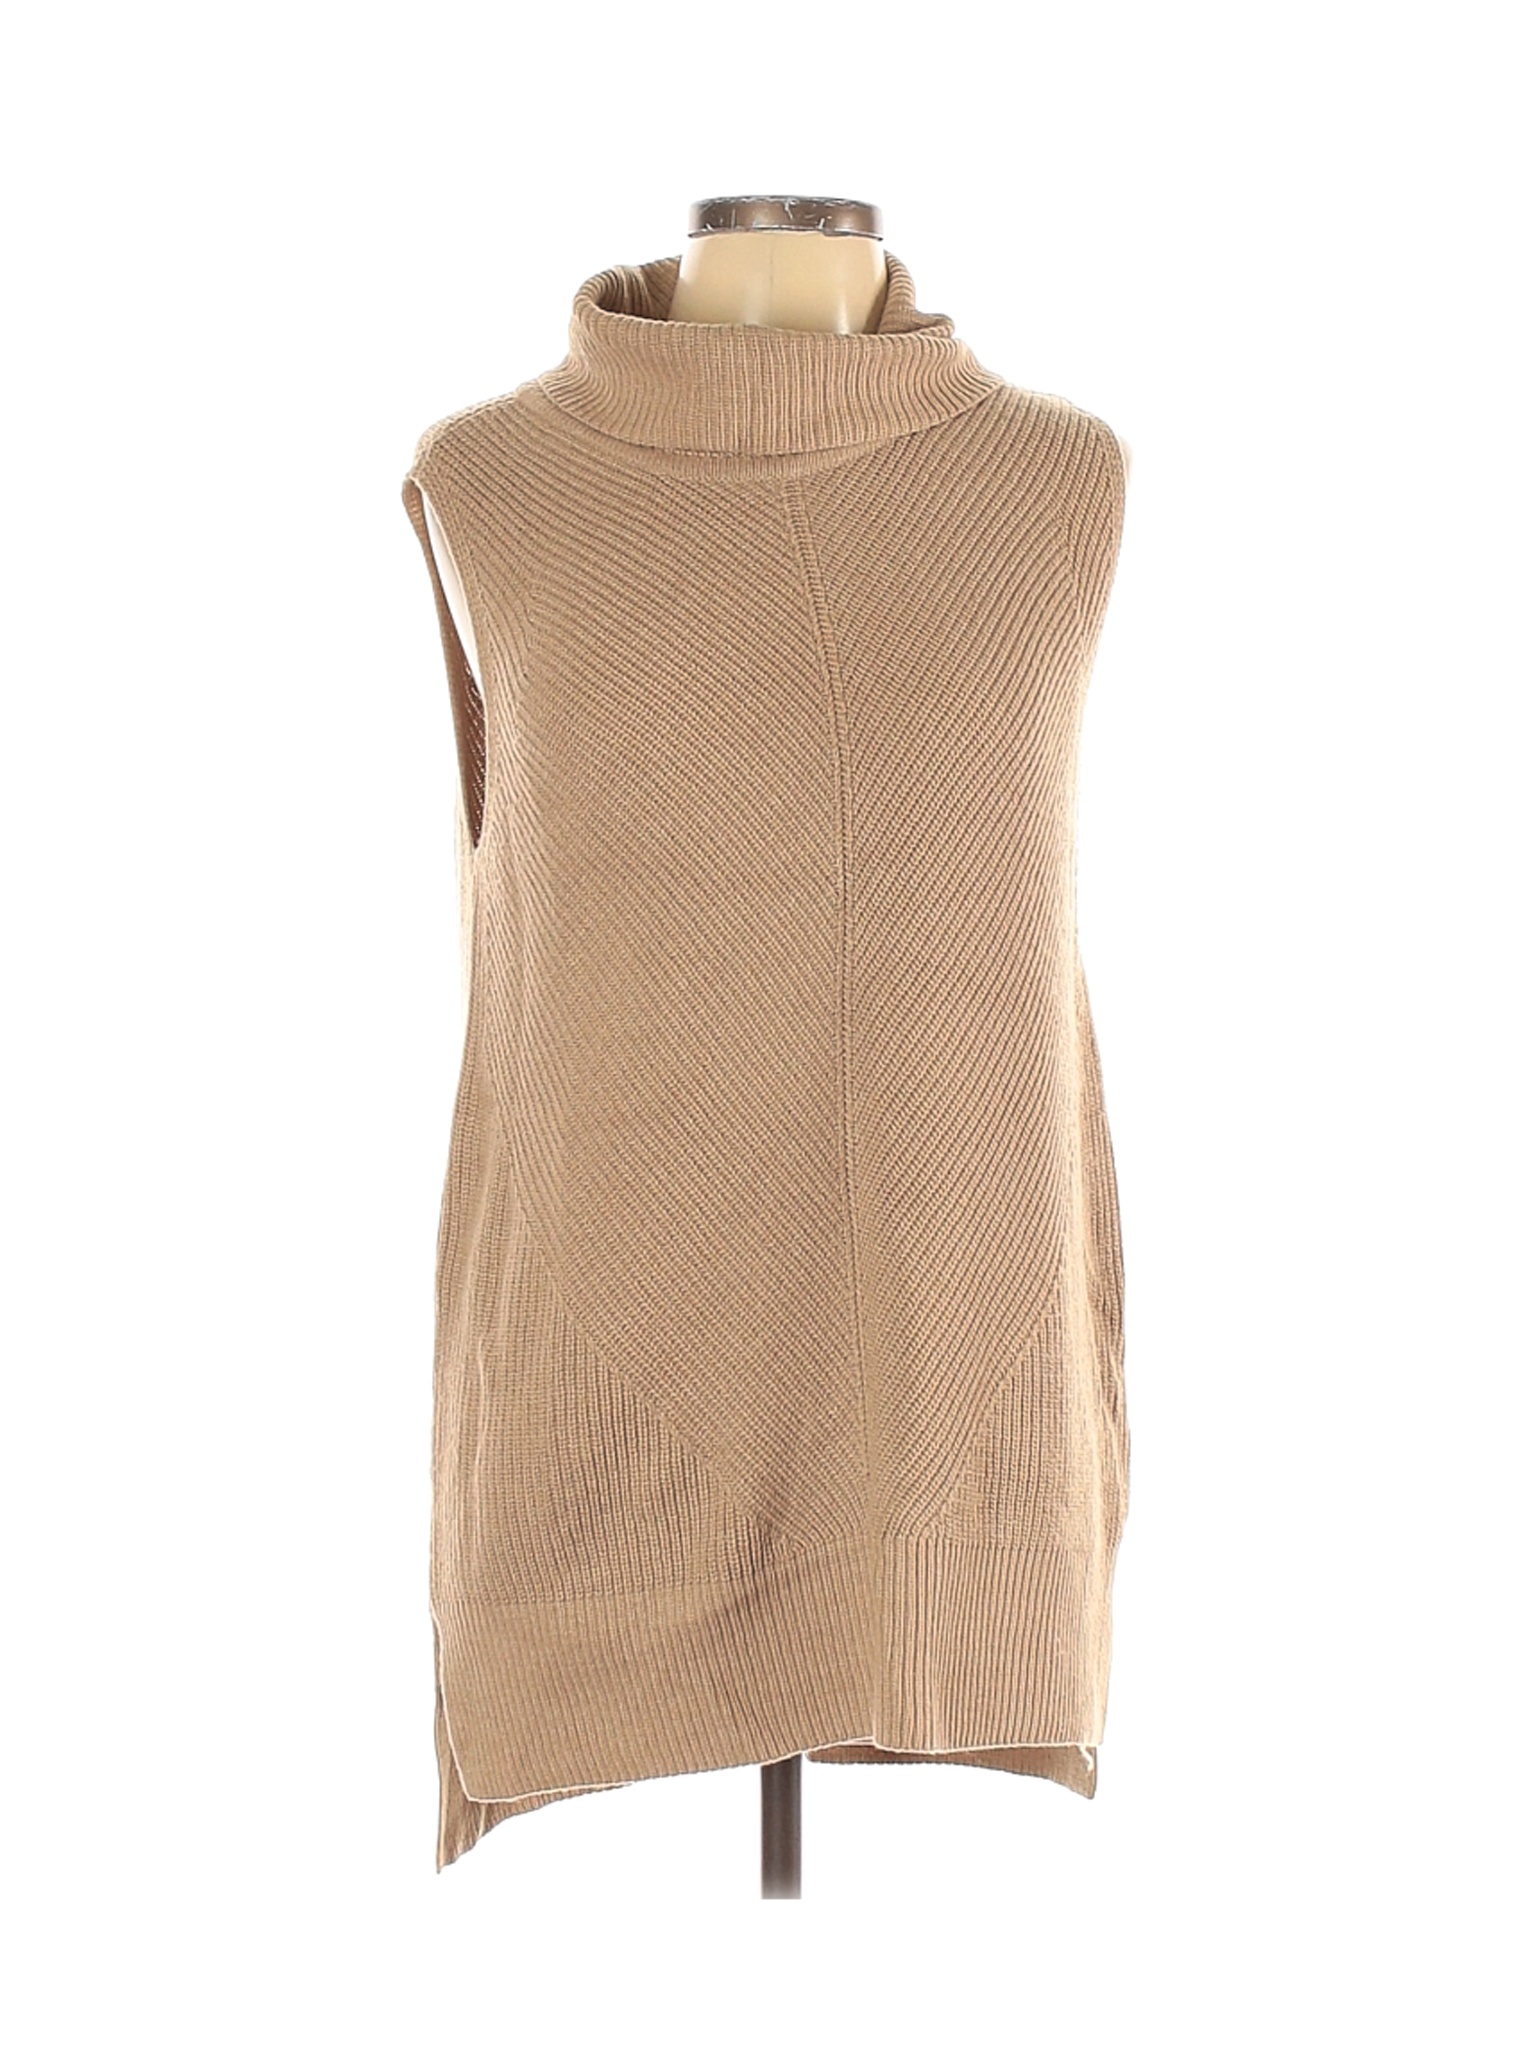 Etcetera Women Brown Turtleneck Sweater L | eBay